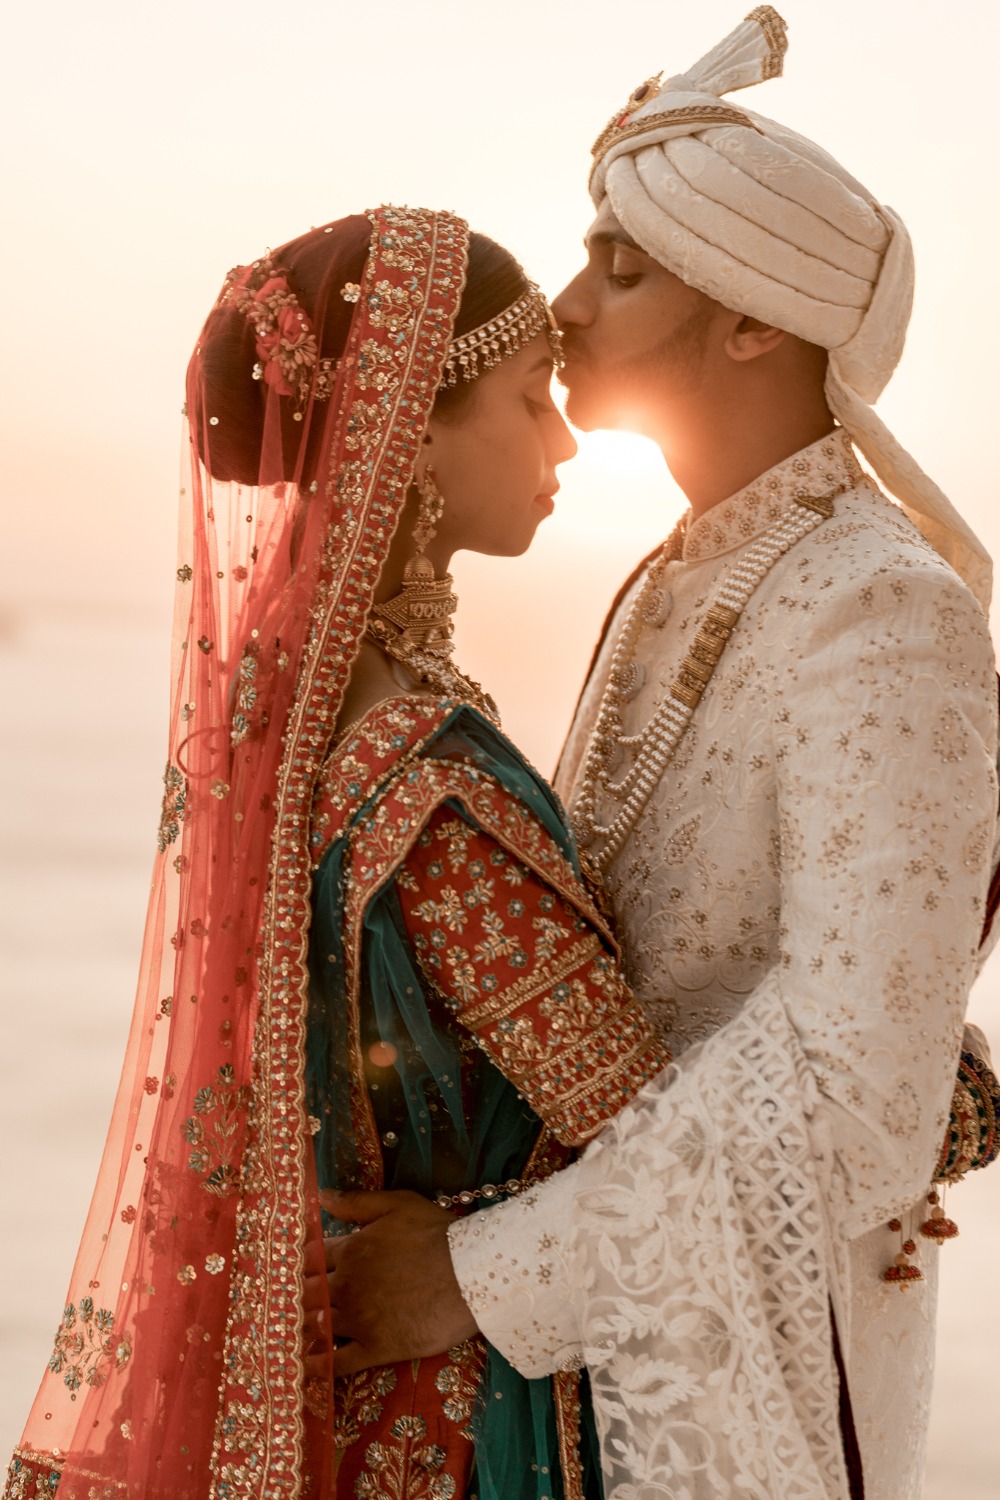 jaw-dropping-hindu-wedding-in-santorini